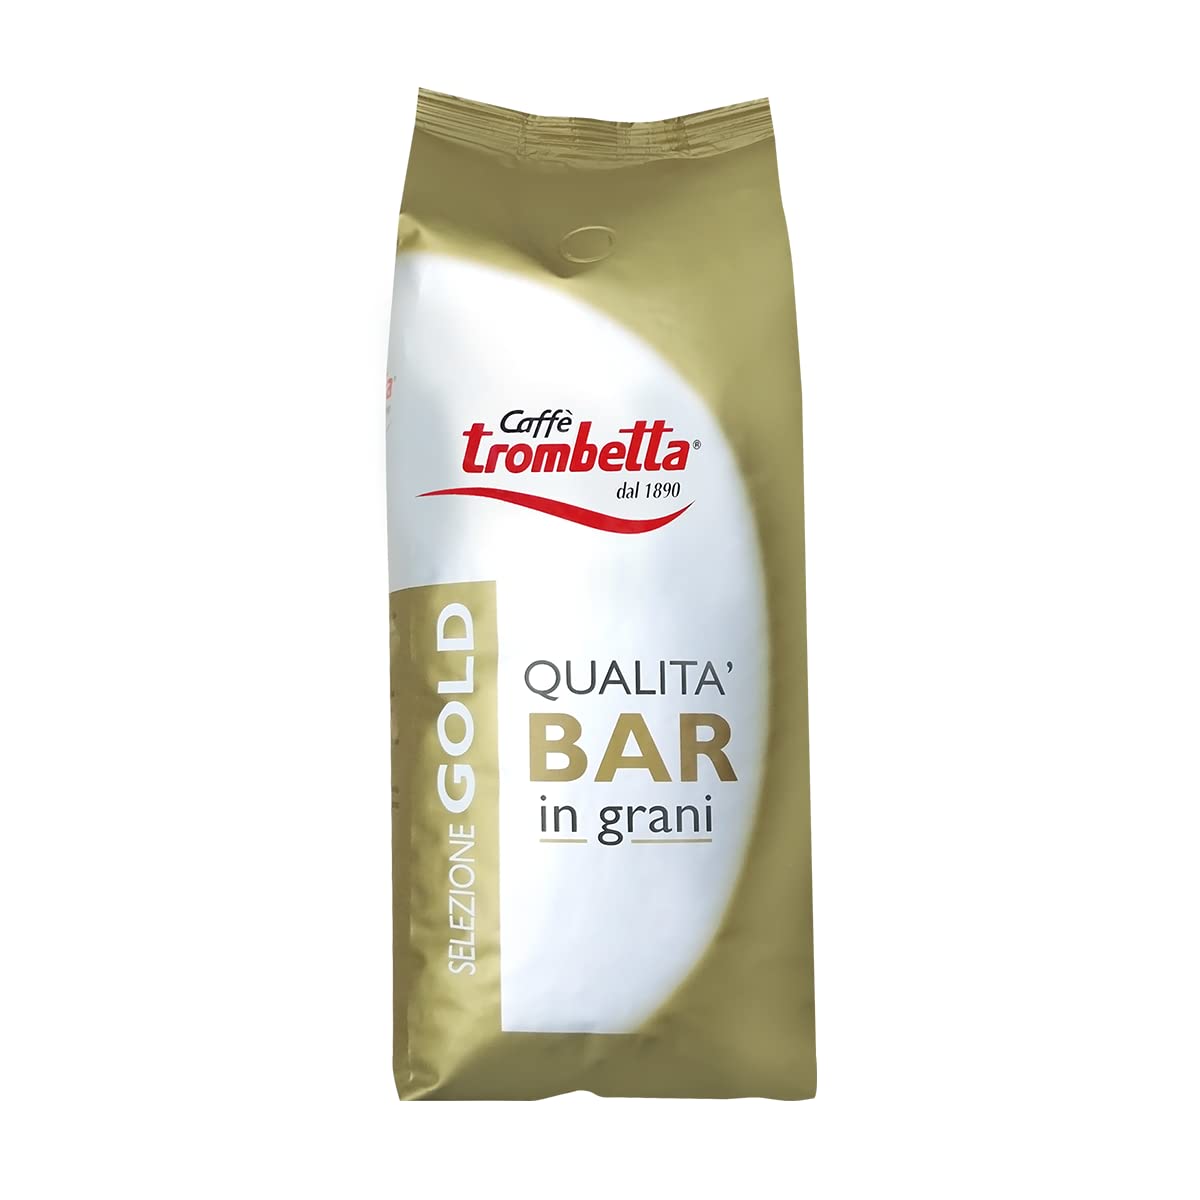 Trombetta Caffe Gold bar Whole Espresso Coffee Beans, Italian Coffee Beans Whole